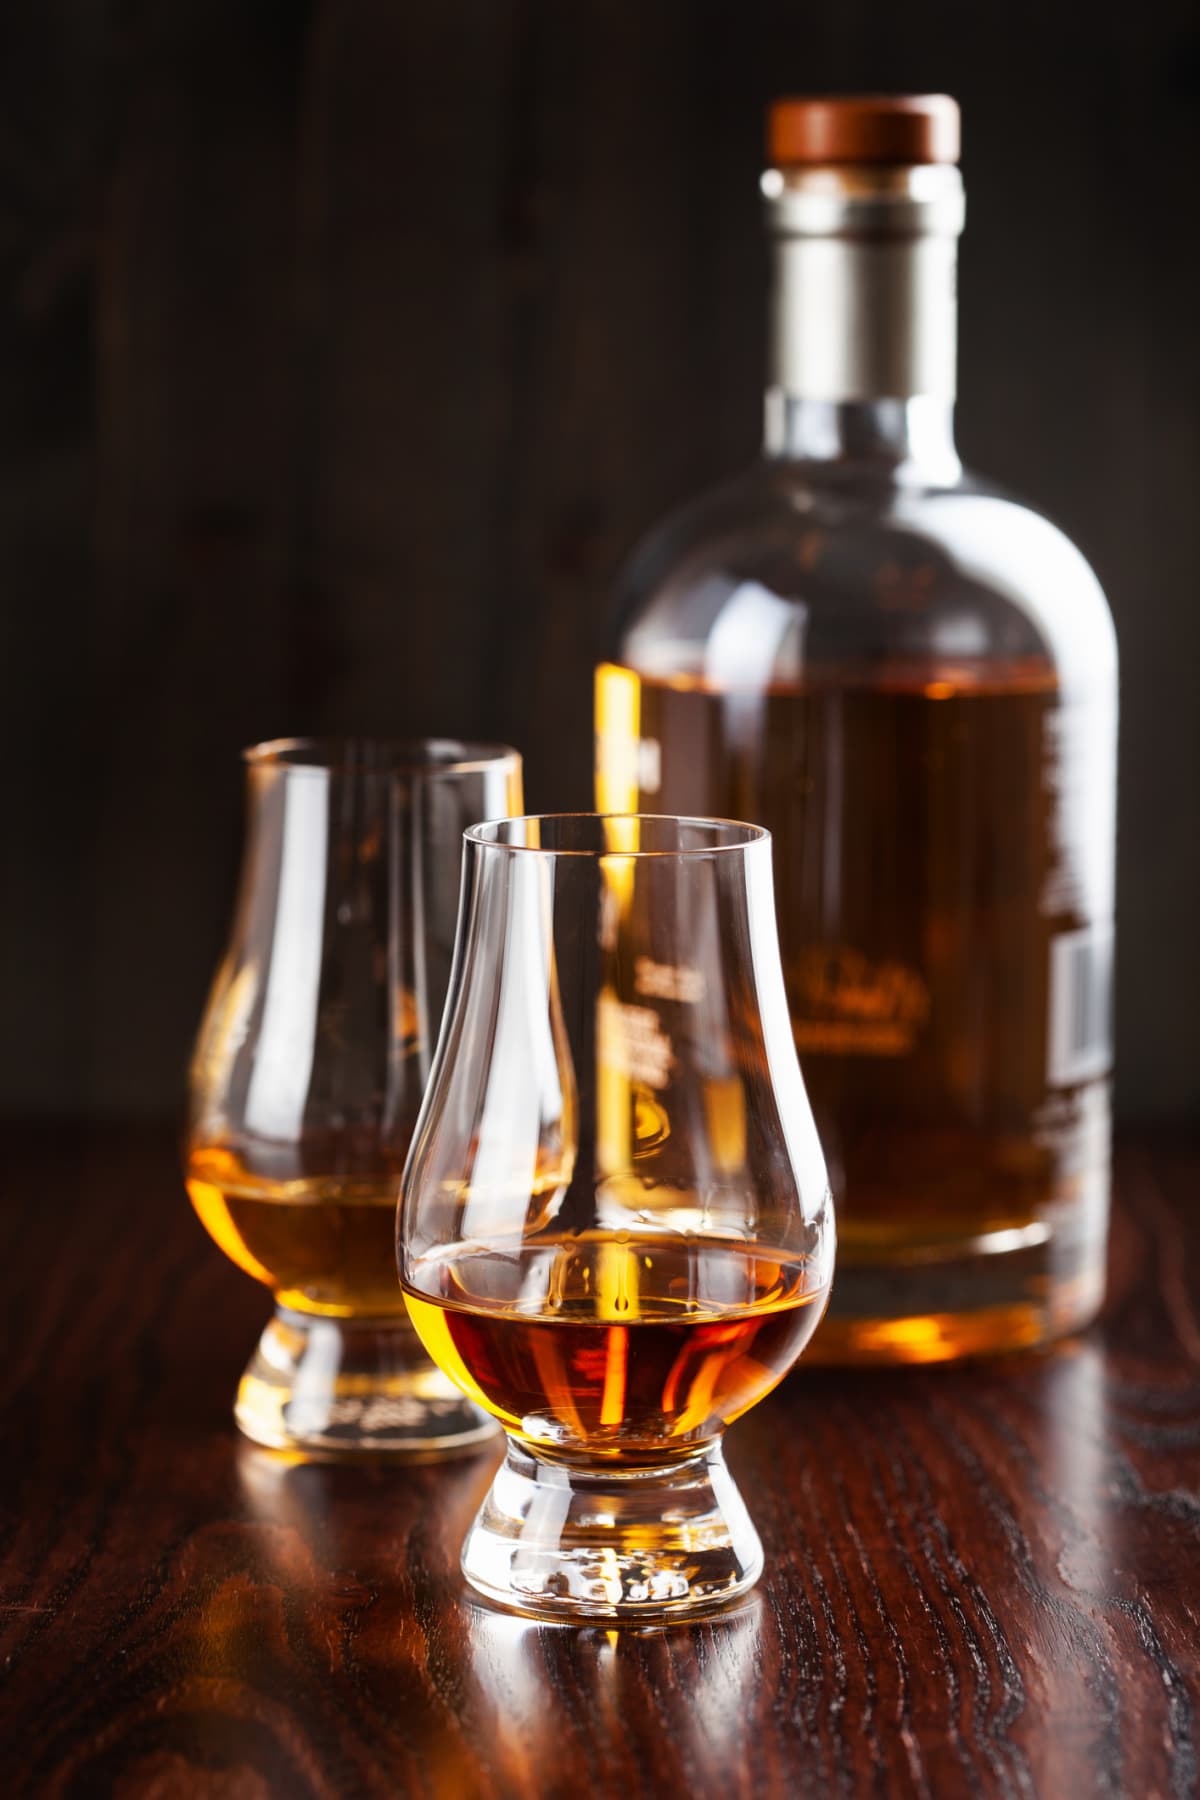 Bottles and glass of whisky spirit brandy on dark brown background